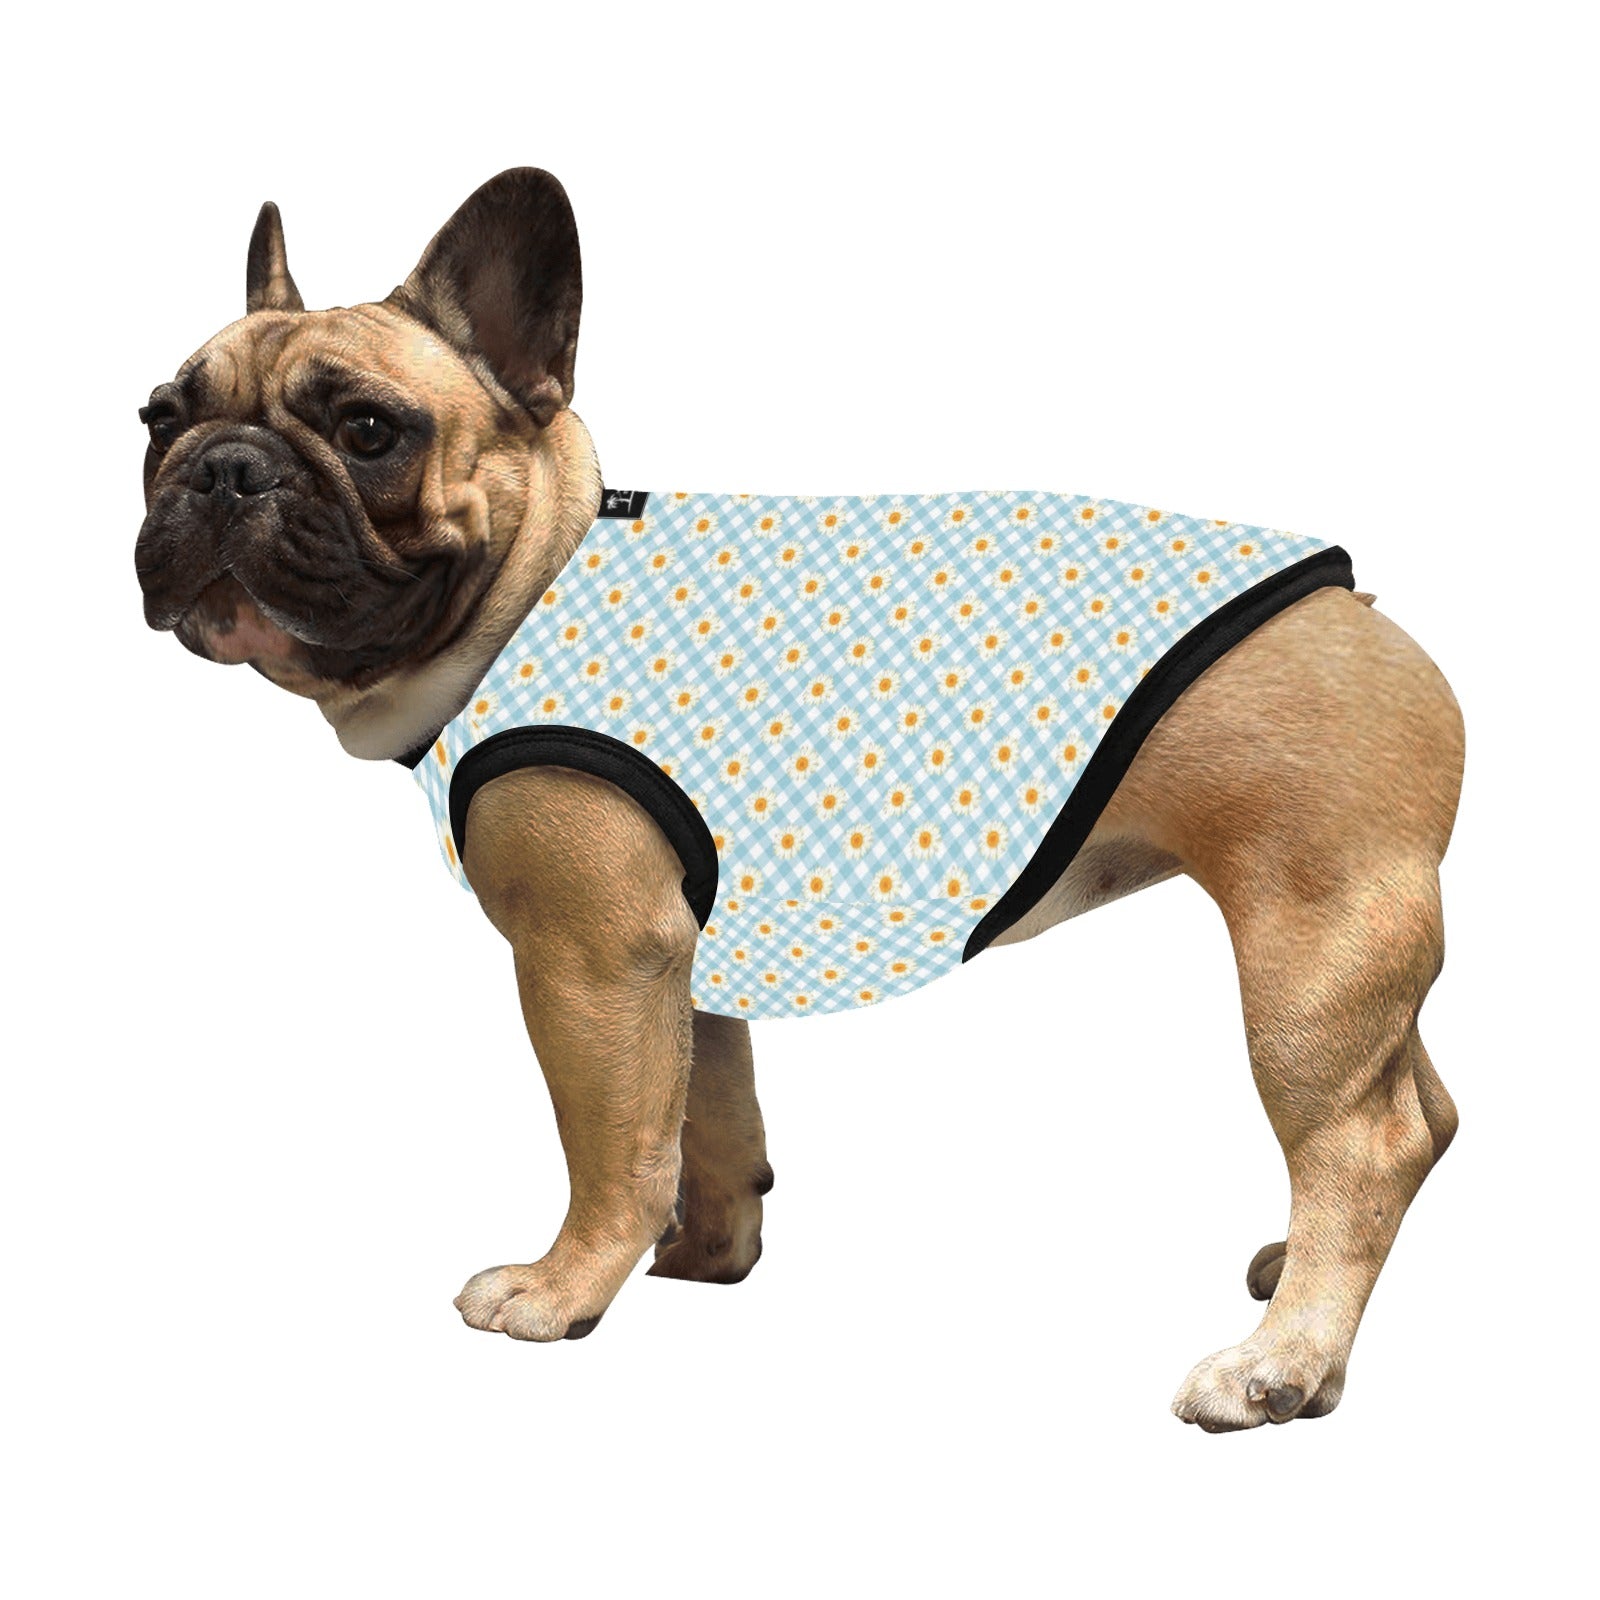 Camiseta sin mangas ligera para mascotas con estampado integral - Margaritas de cuadros azules